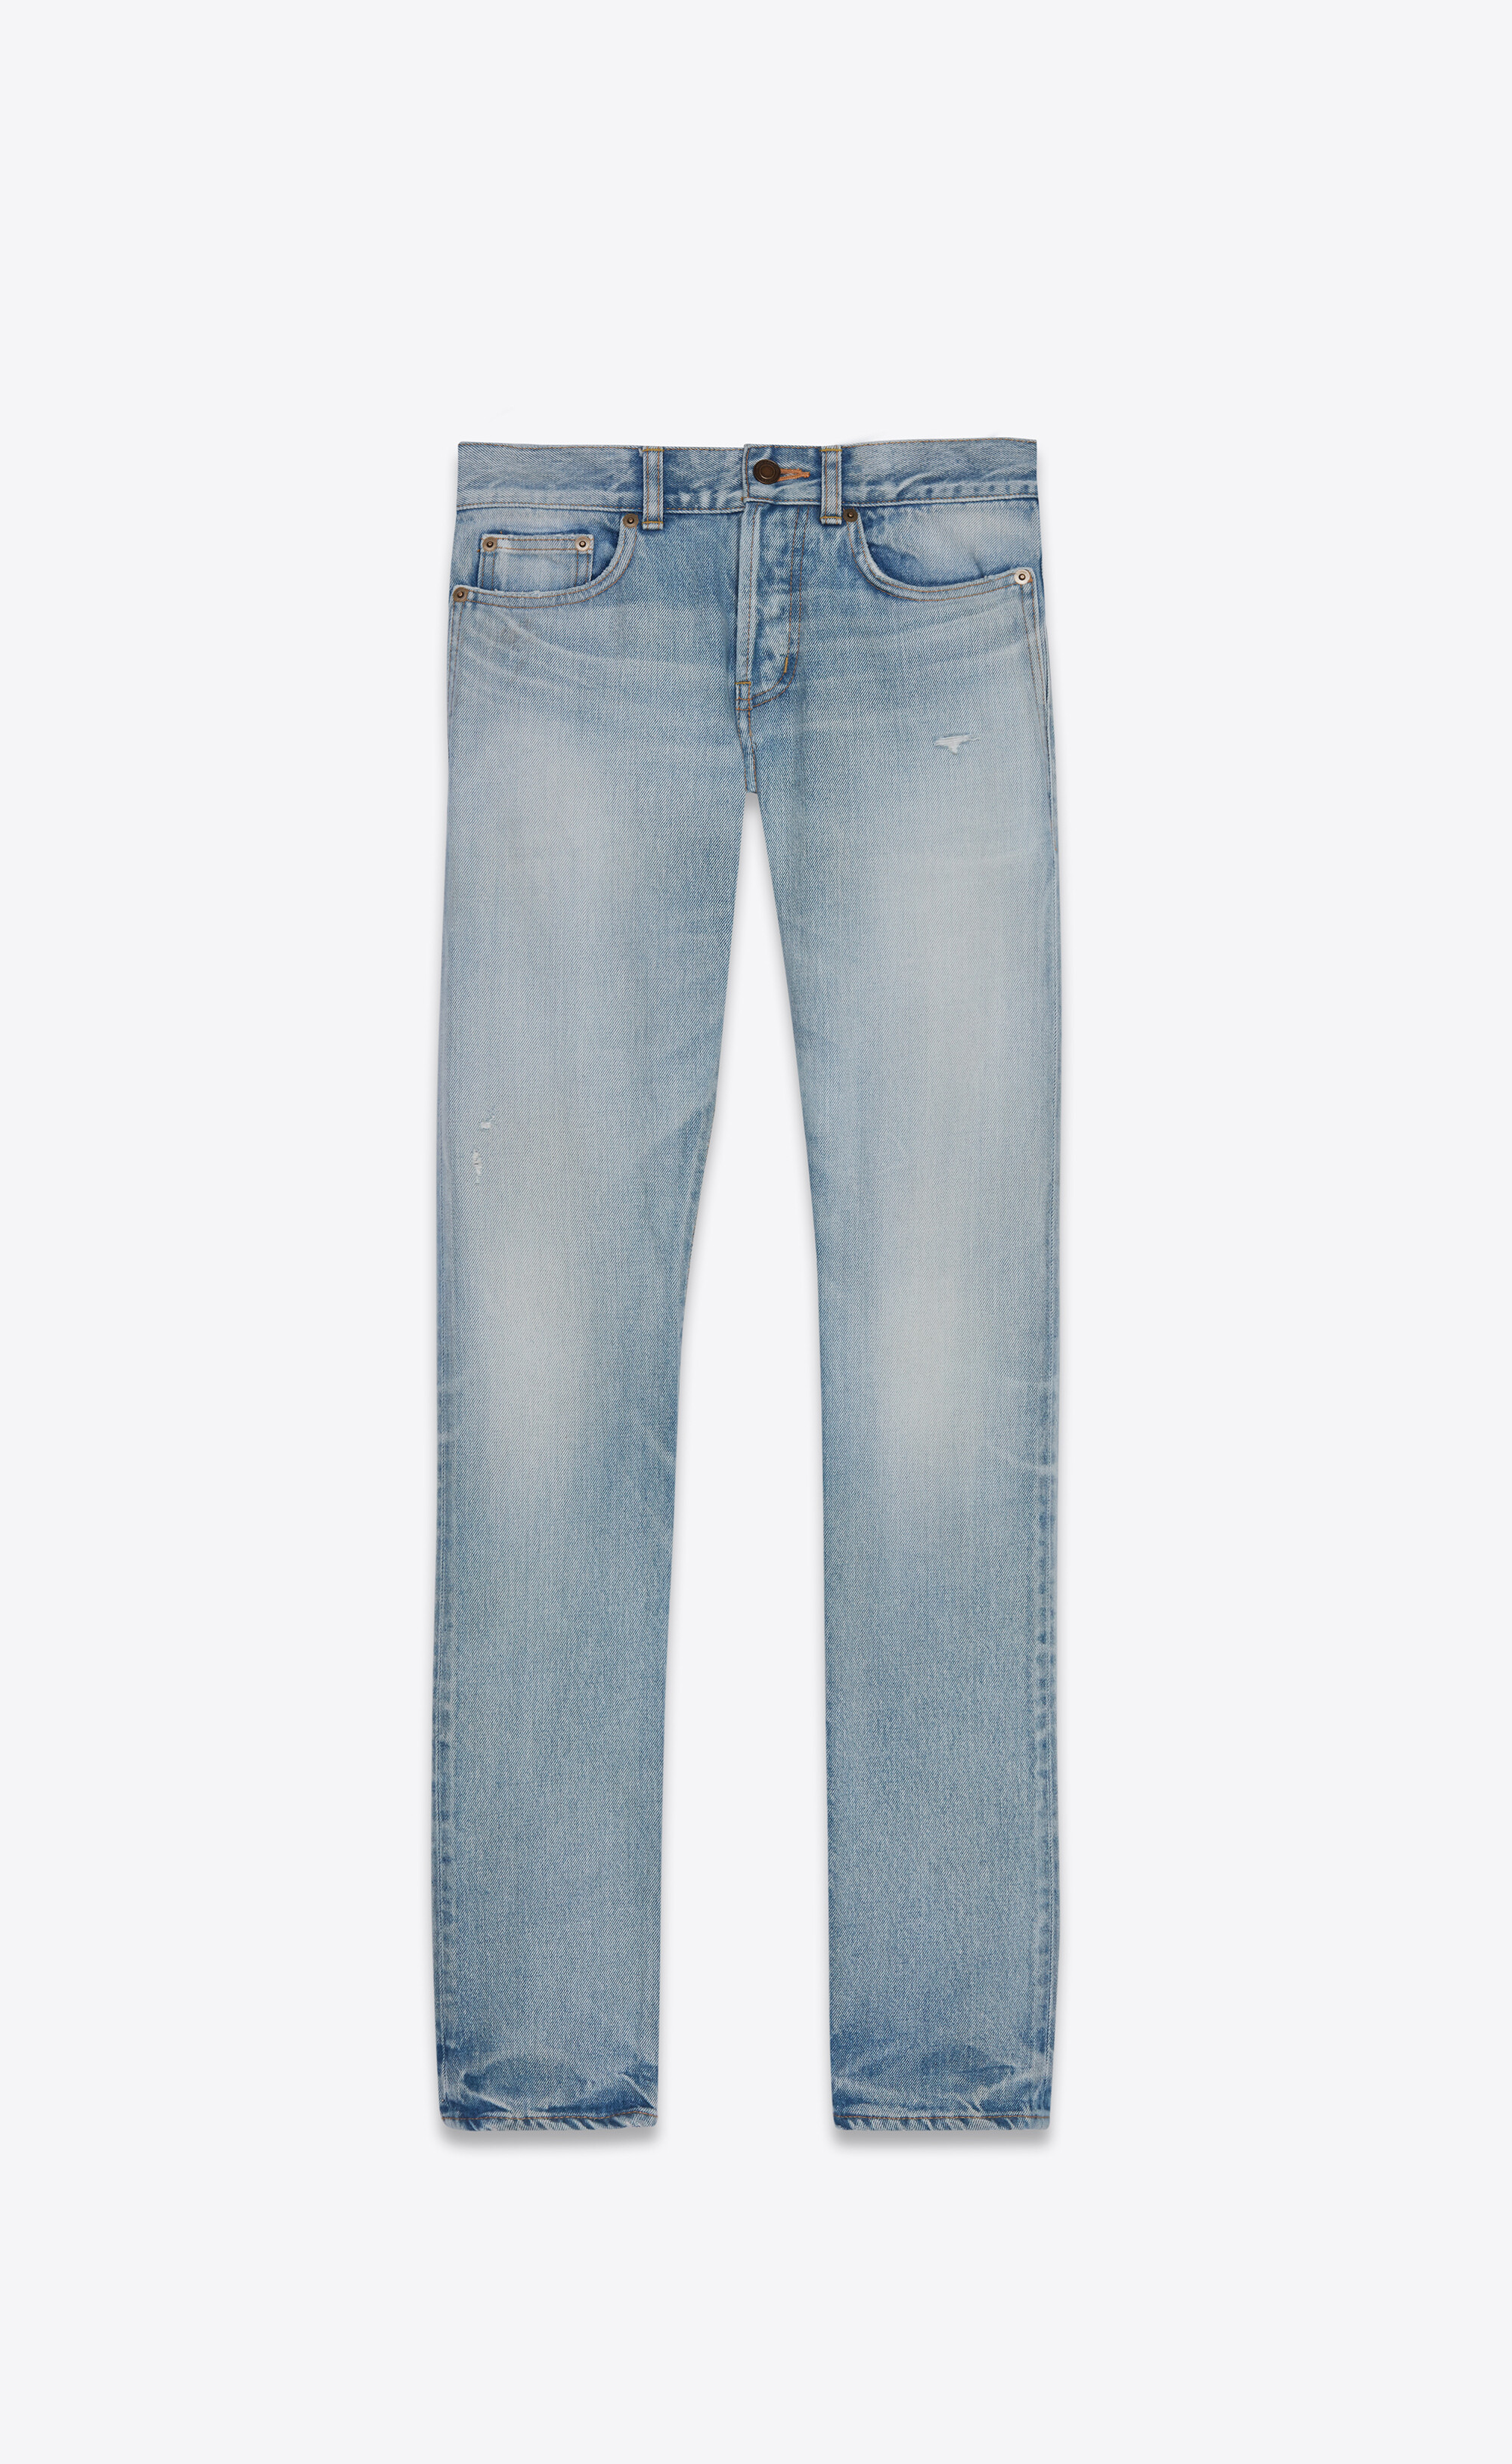 fout Verliefd Geweldig Slim-fit jeans in light fall blue denim | Saint Laurent | YSL.com